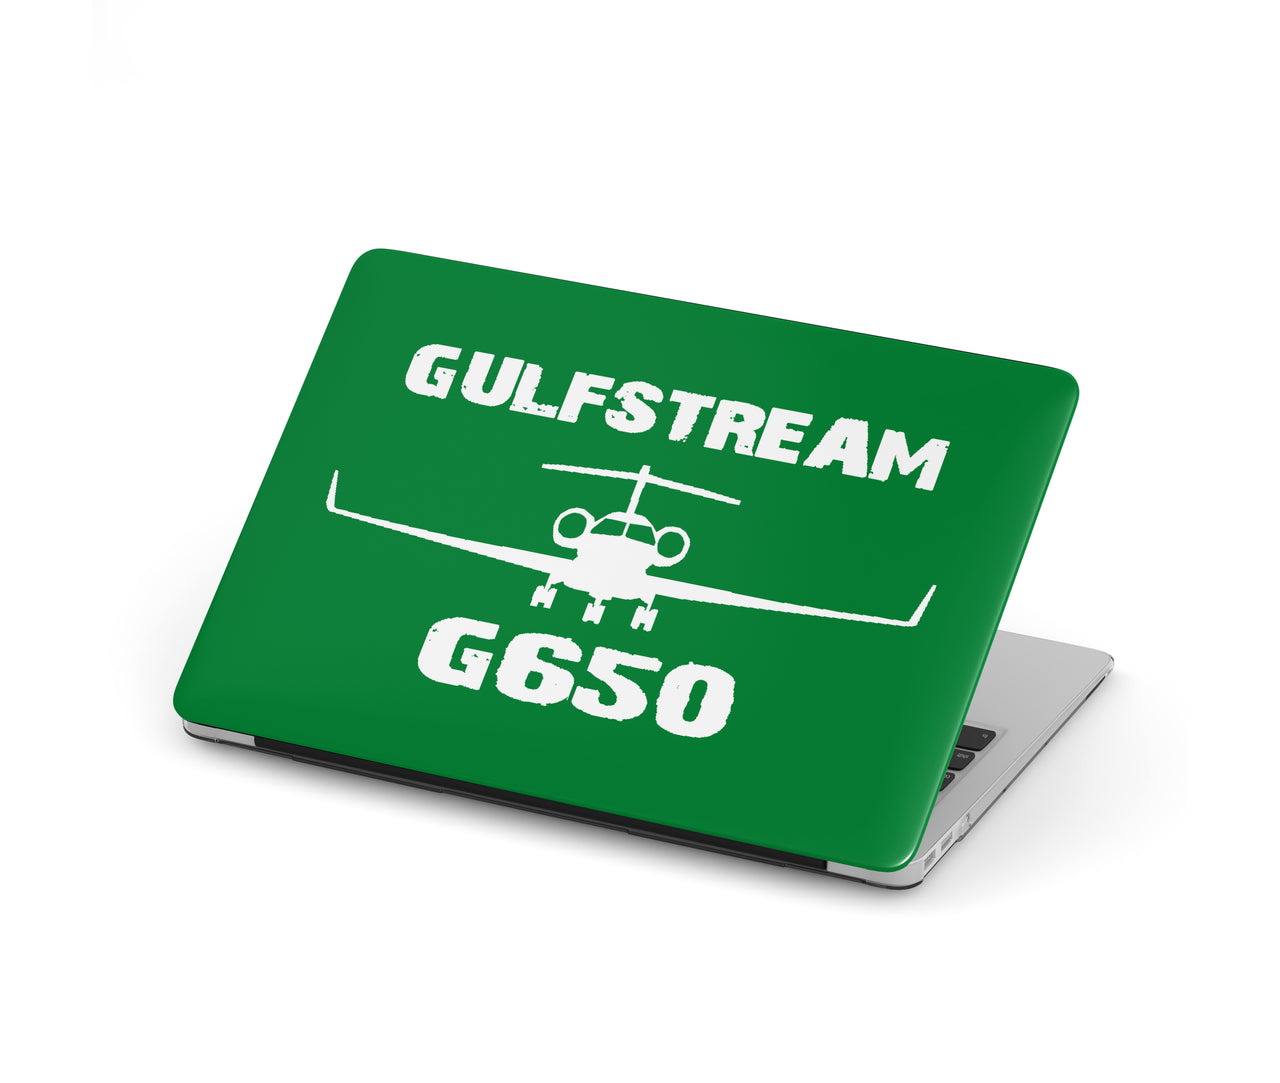 Gulfstream G650 & Plane Designed Macbook Cases